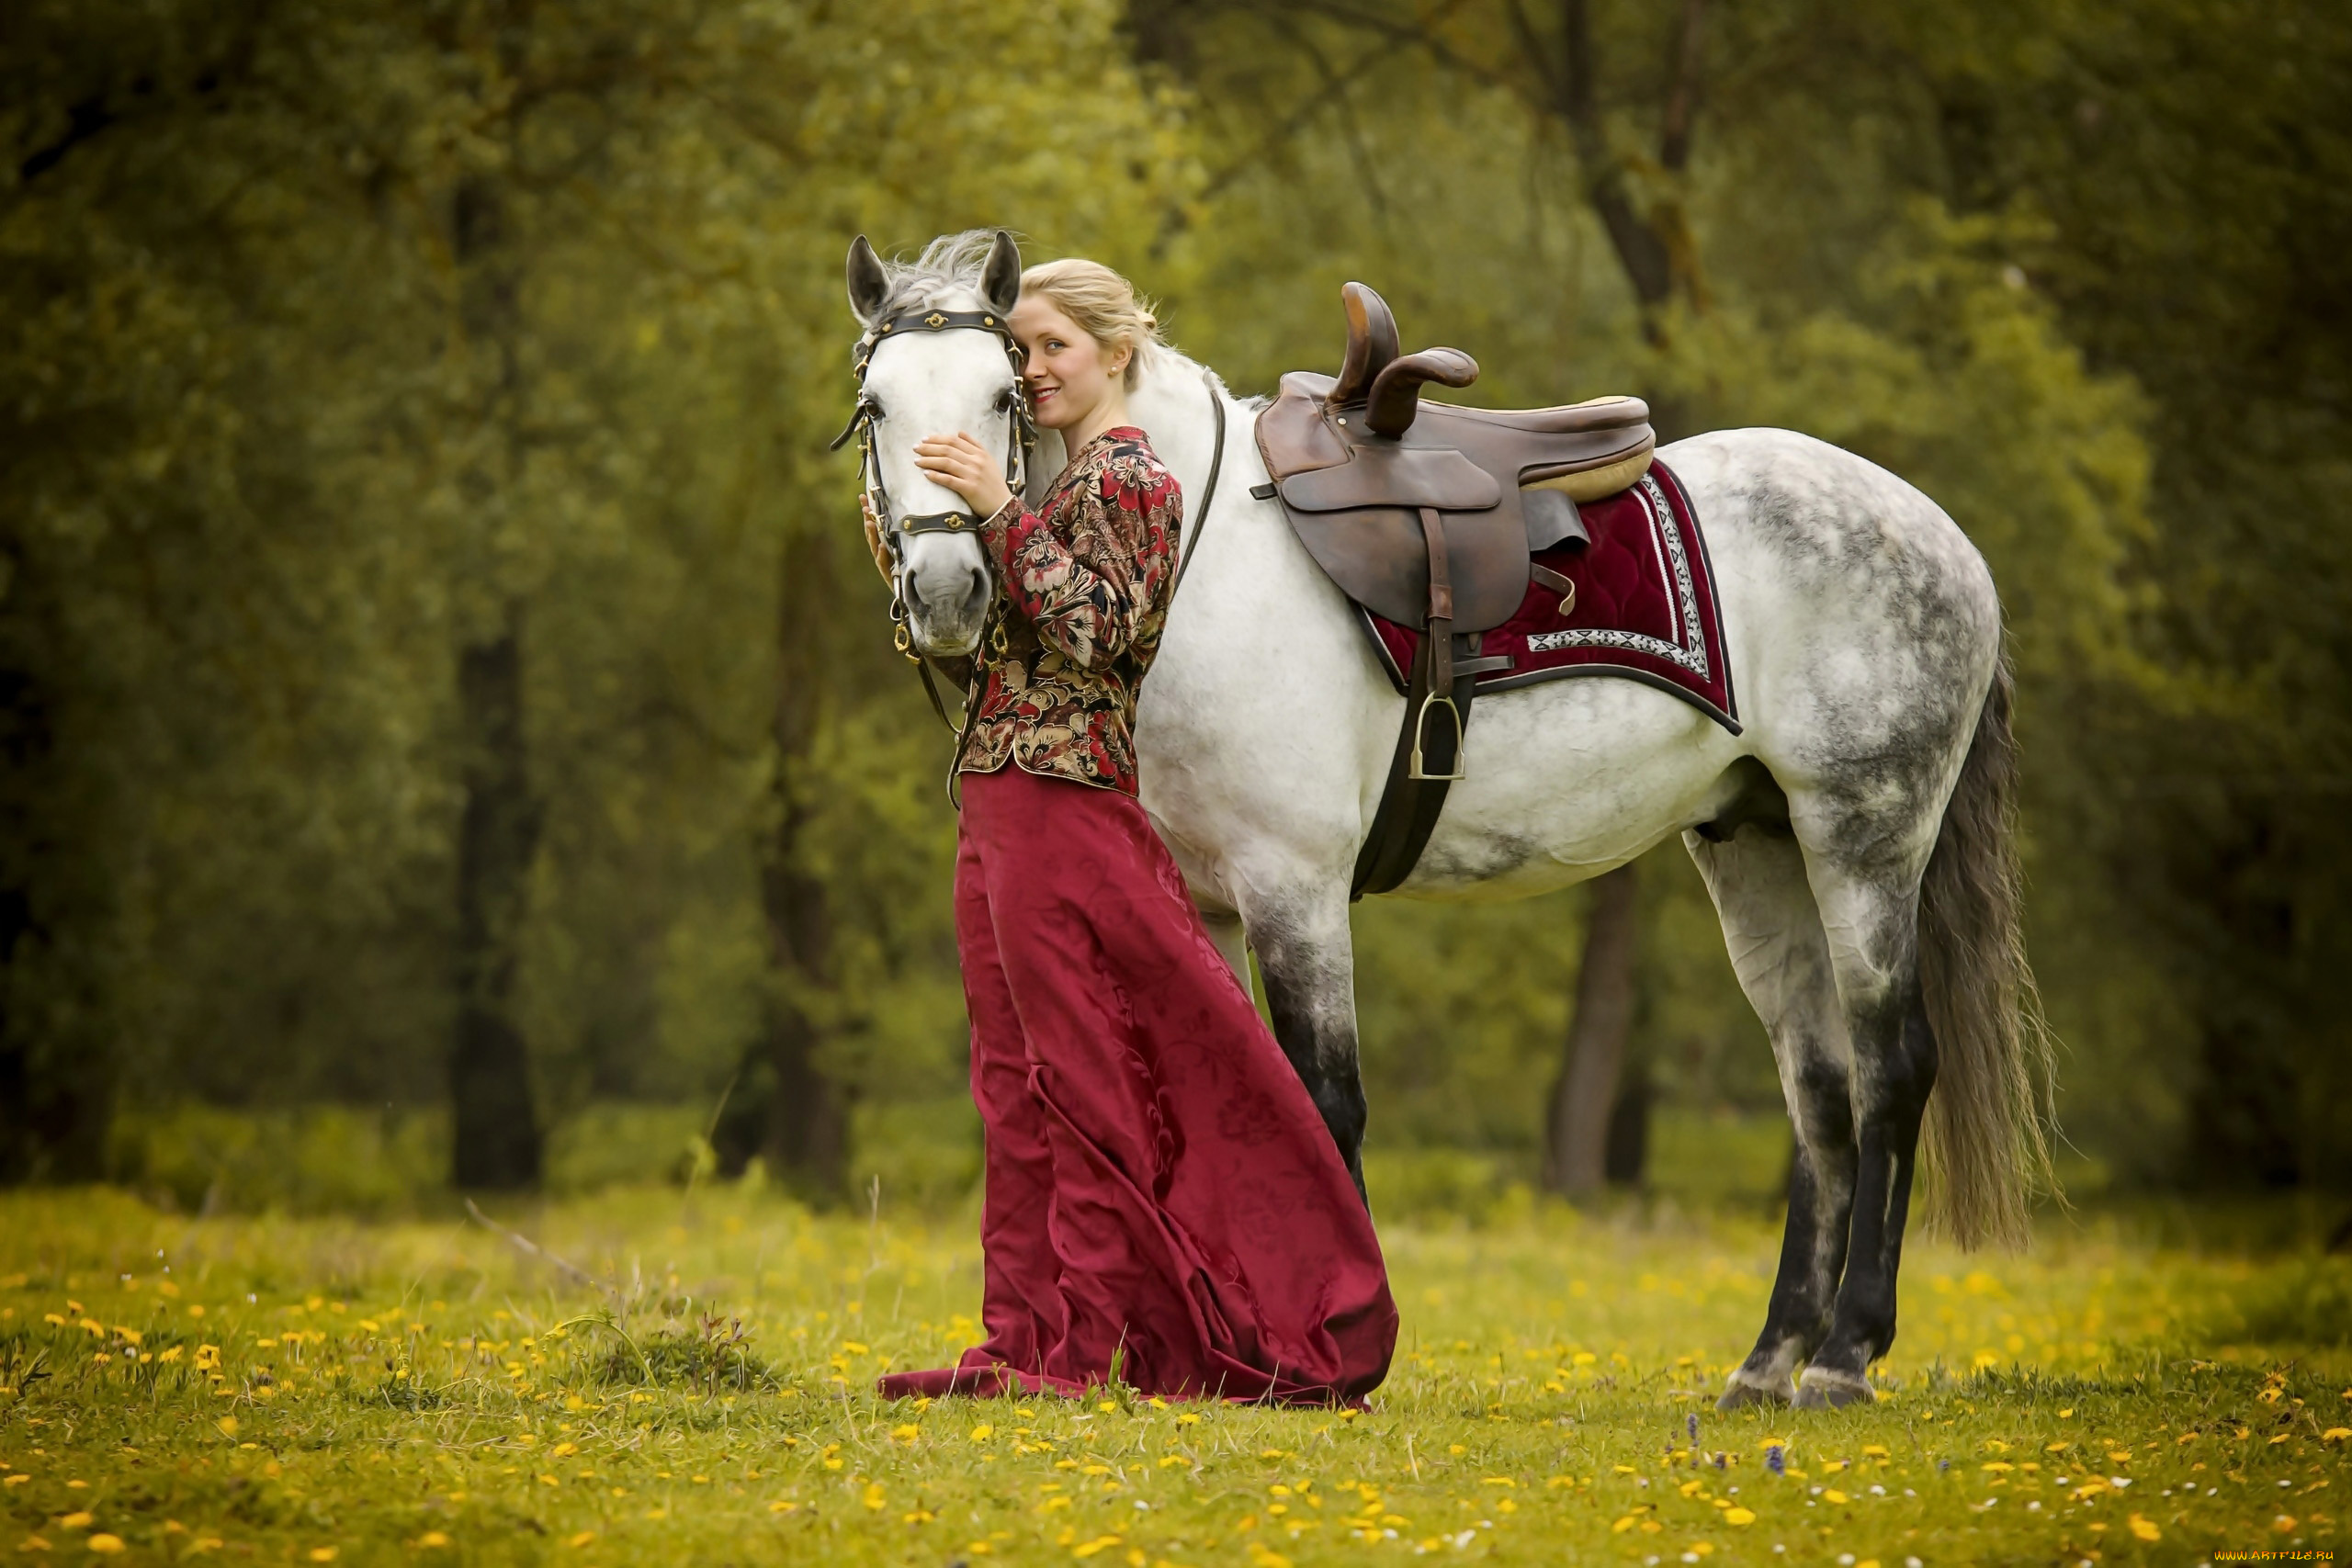 Русская девушка с лошадью. Девушка с лошадью. Фотосессия с лошадьми. Девушка верхом на лошади. Казачка на коне.